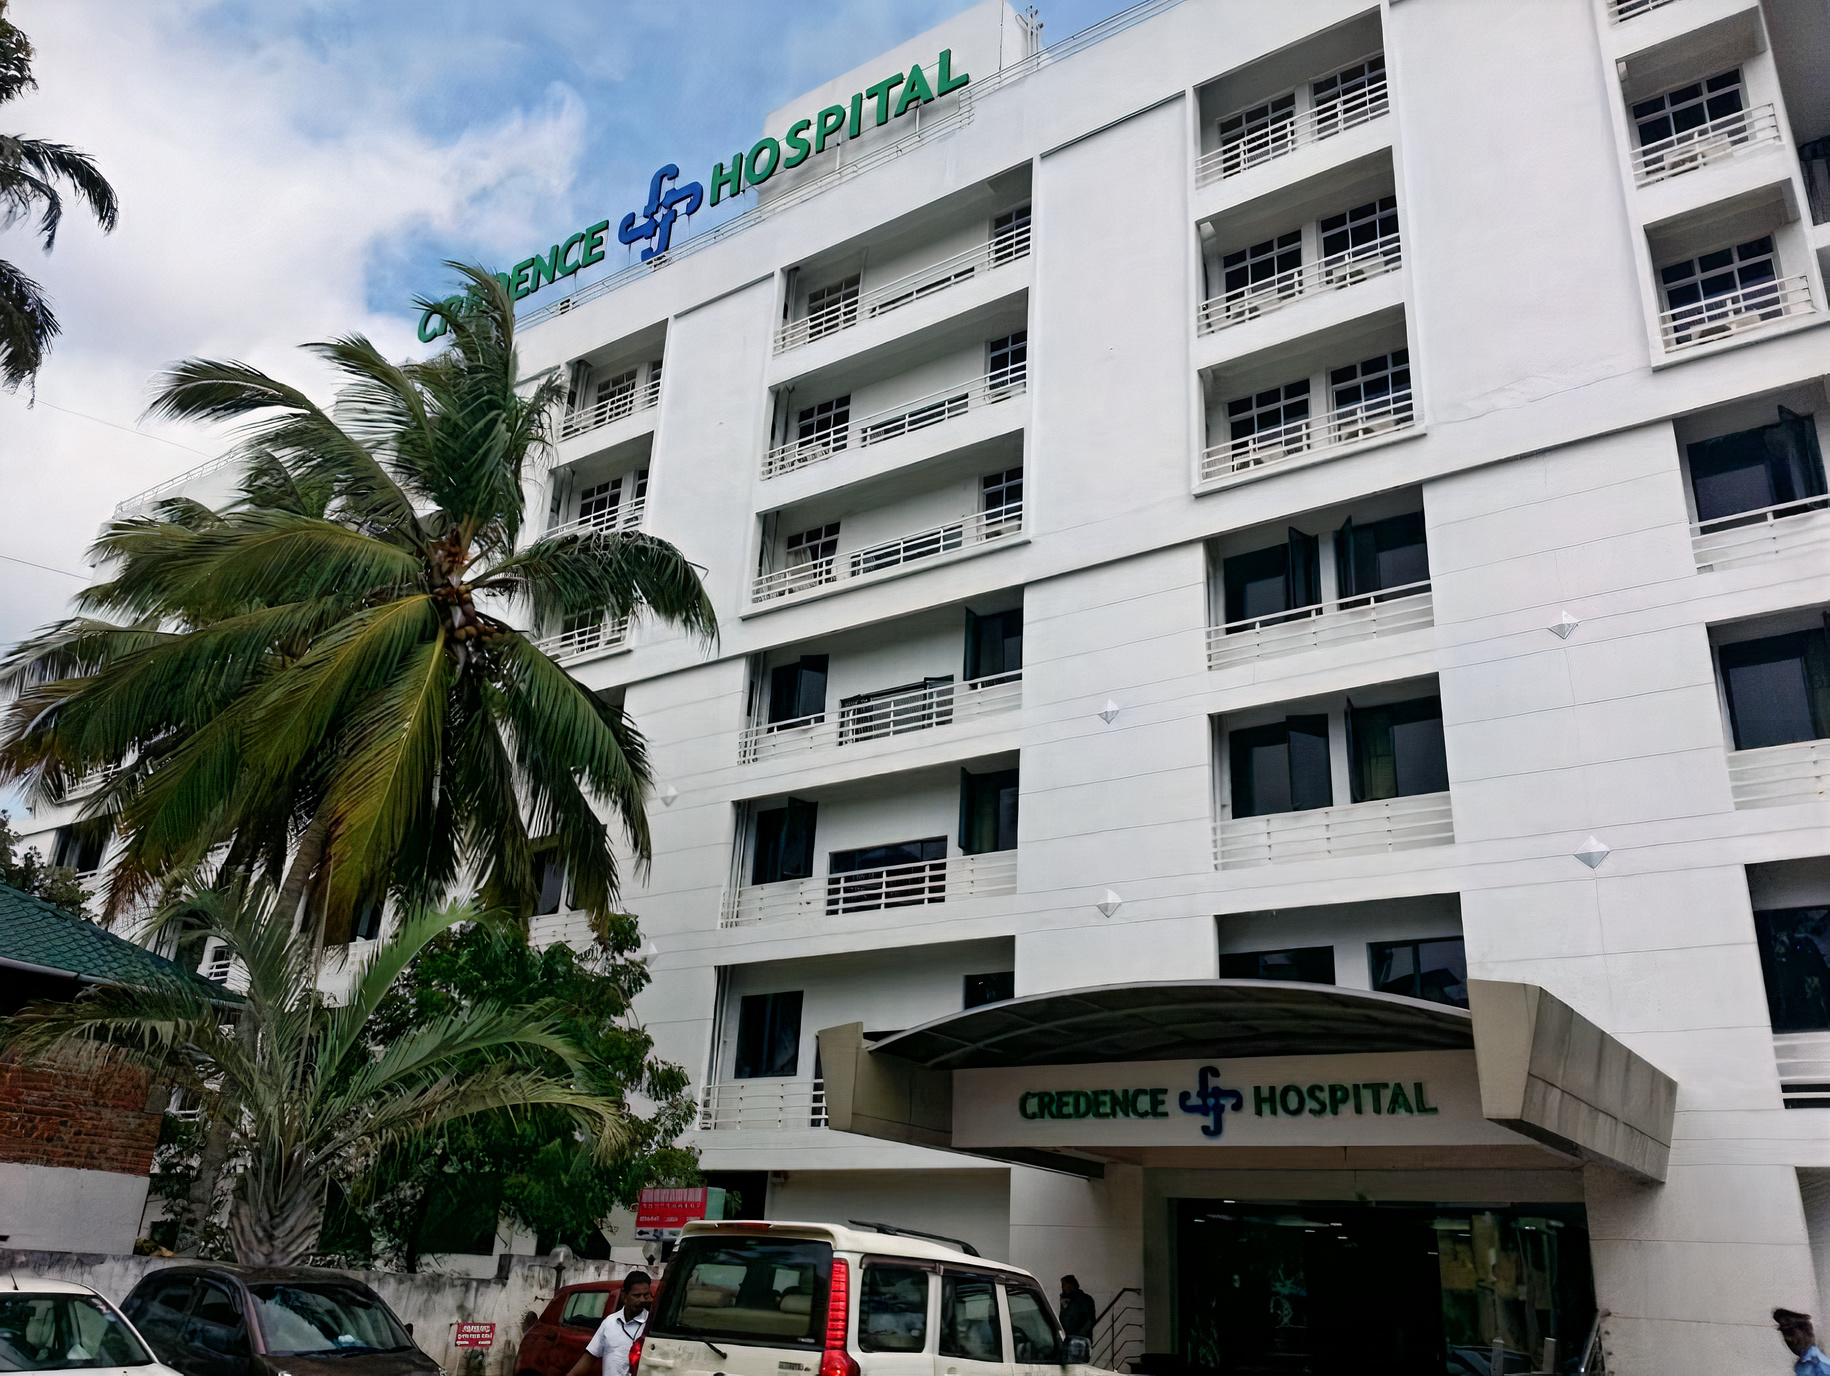 Credence Hospital